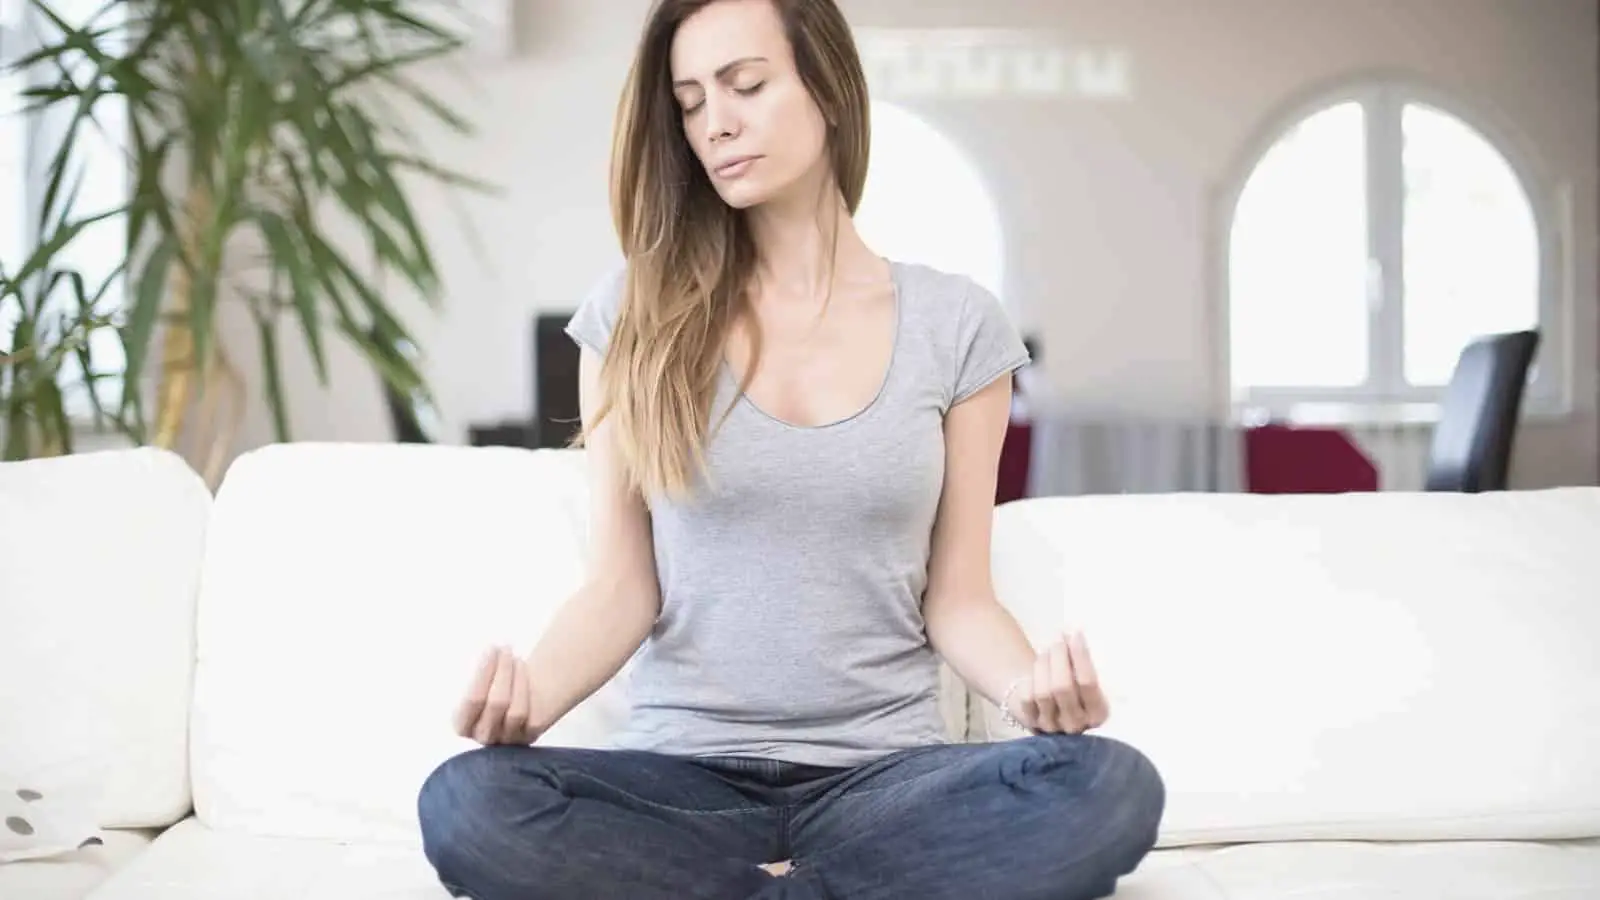 How Should You Feel After Meditation?